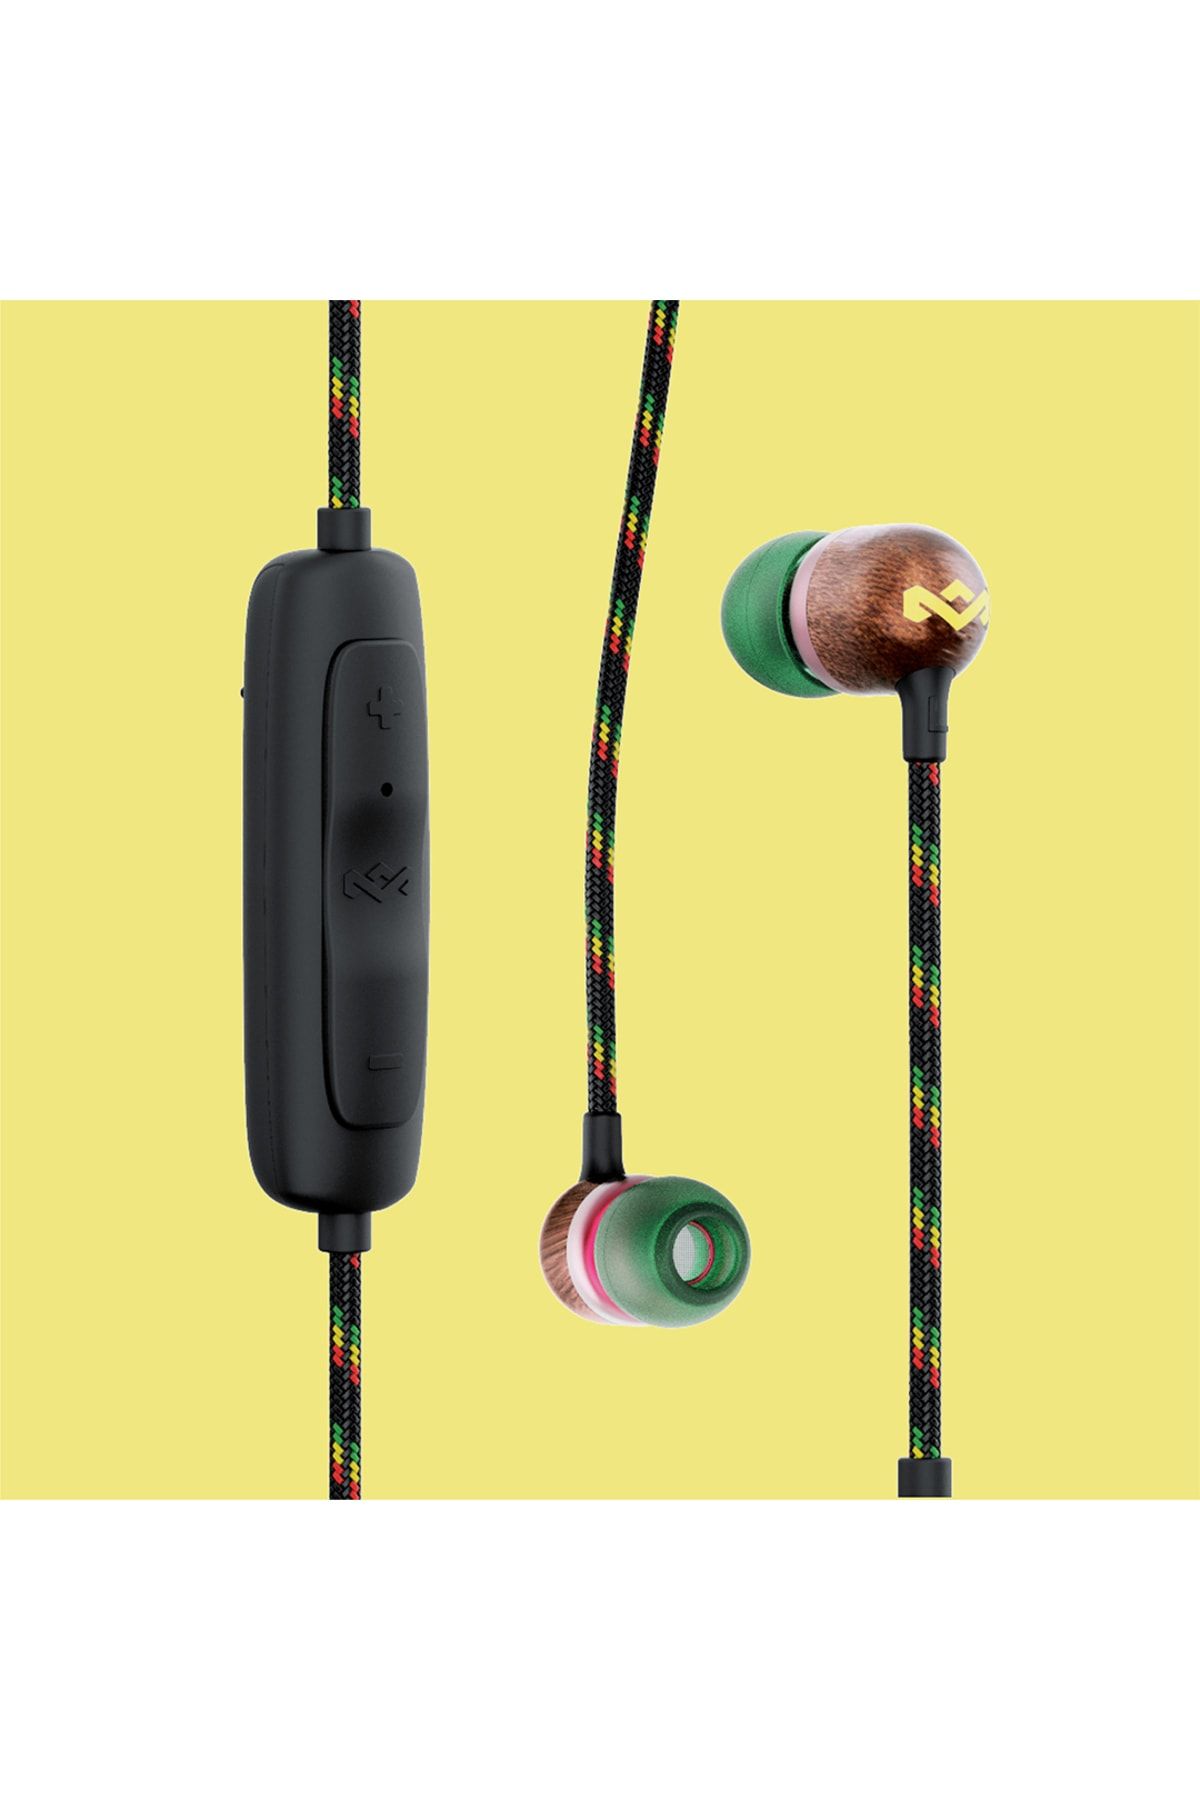 Marley Smıle Jamaıca Wıreless 2 Ra-renkli Kablosuz Wireless 2.0 Bluetooth 5.0 Kulak Içi Kulaklık